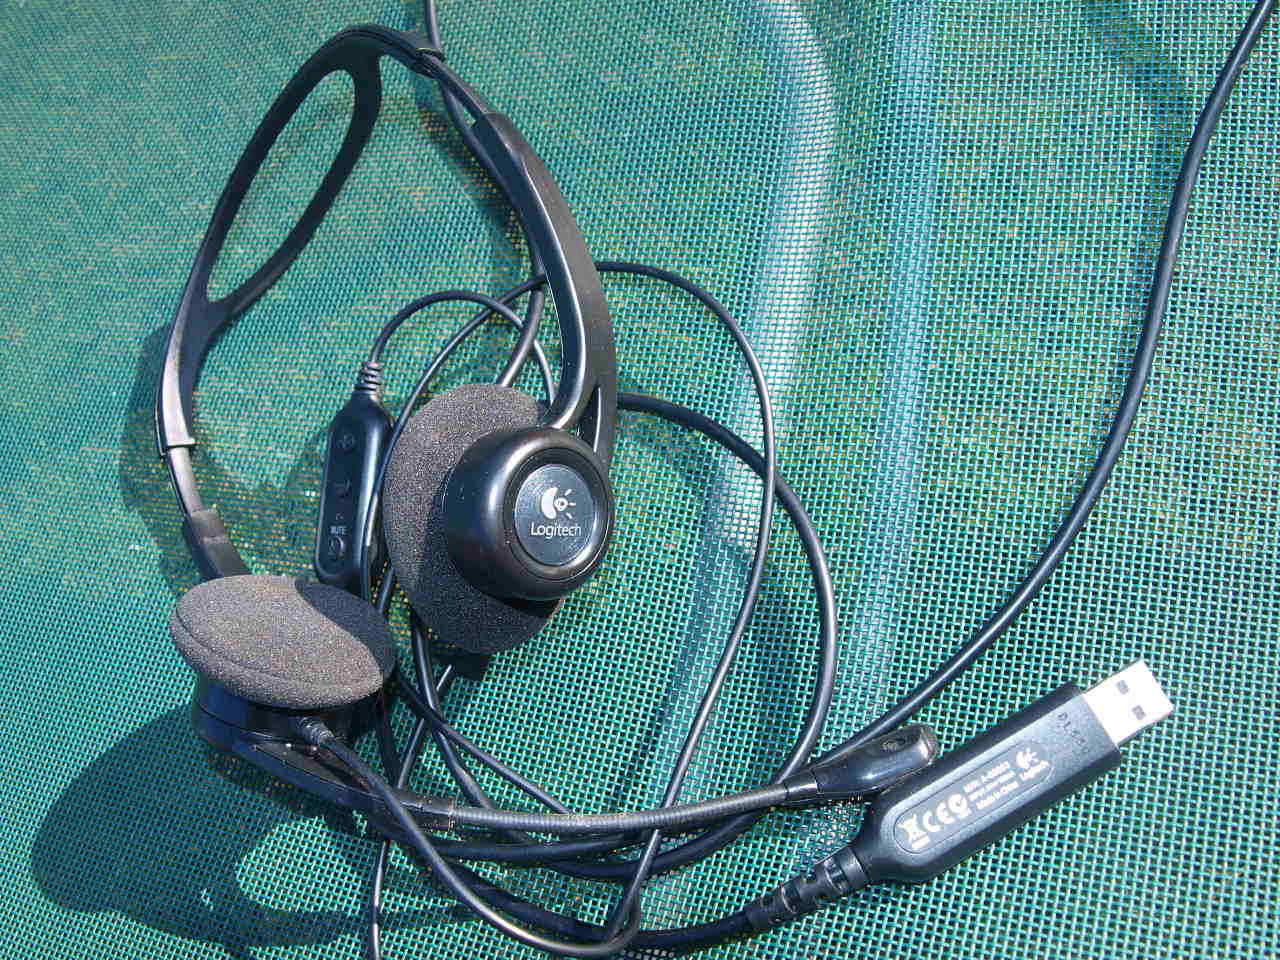 Headset Logitech PC 960 USB Headset and 9 similar items